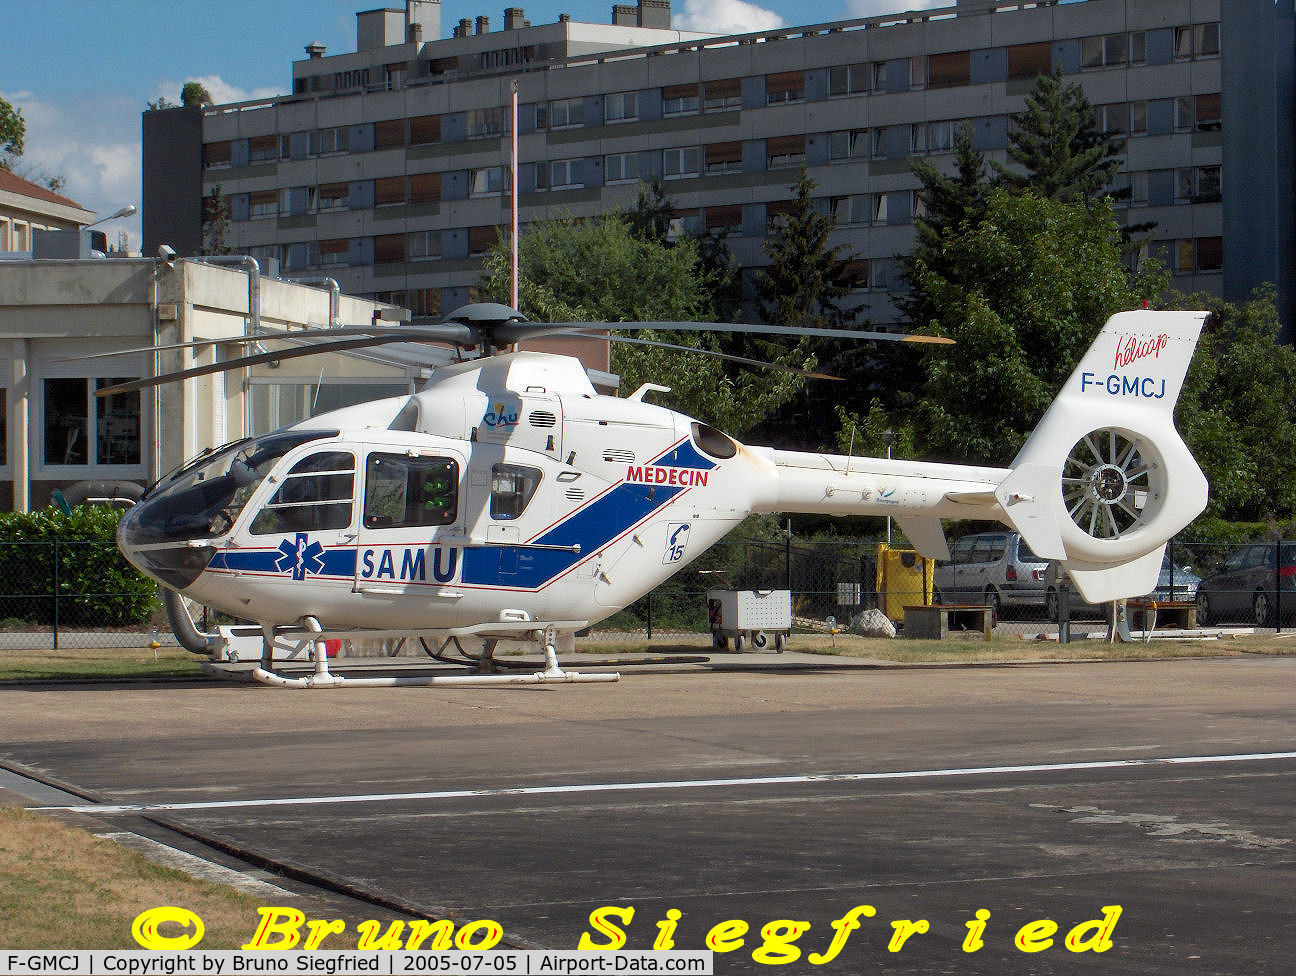 F-GMCJ, Eurocopter EC-135T-1 C/N 0020, Dijon Hospital